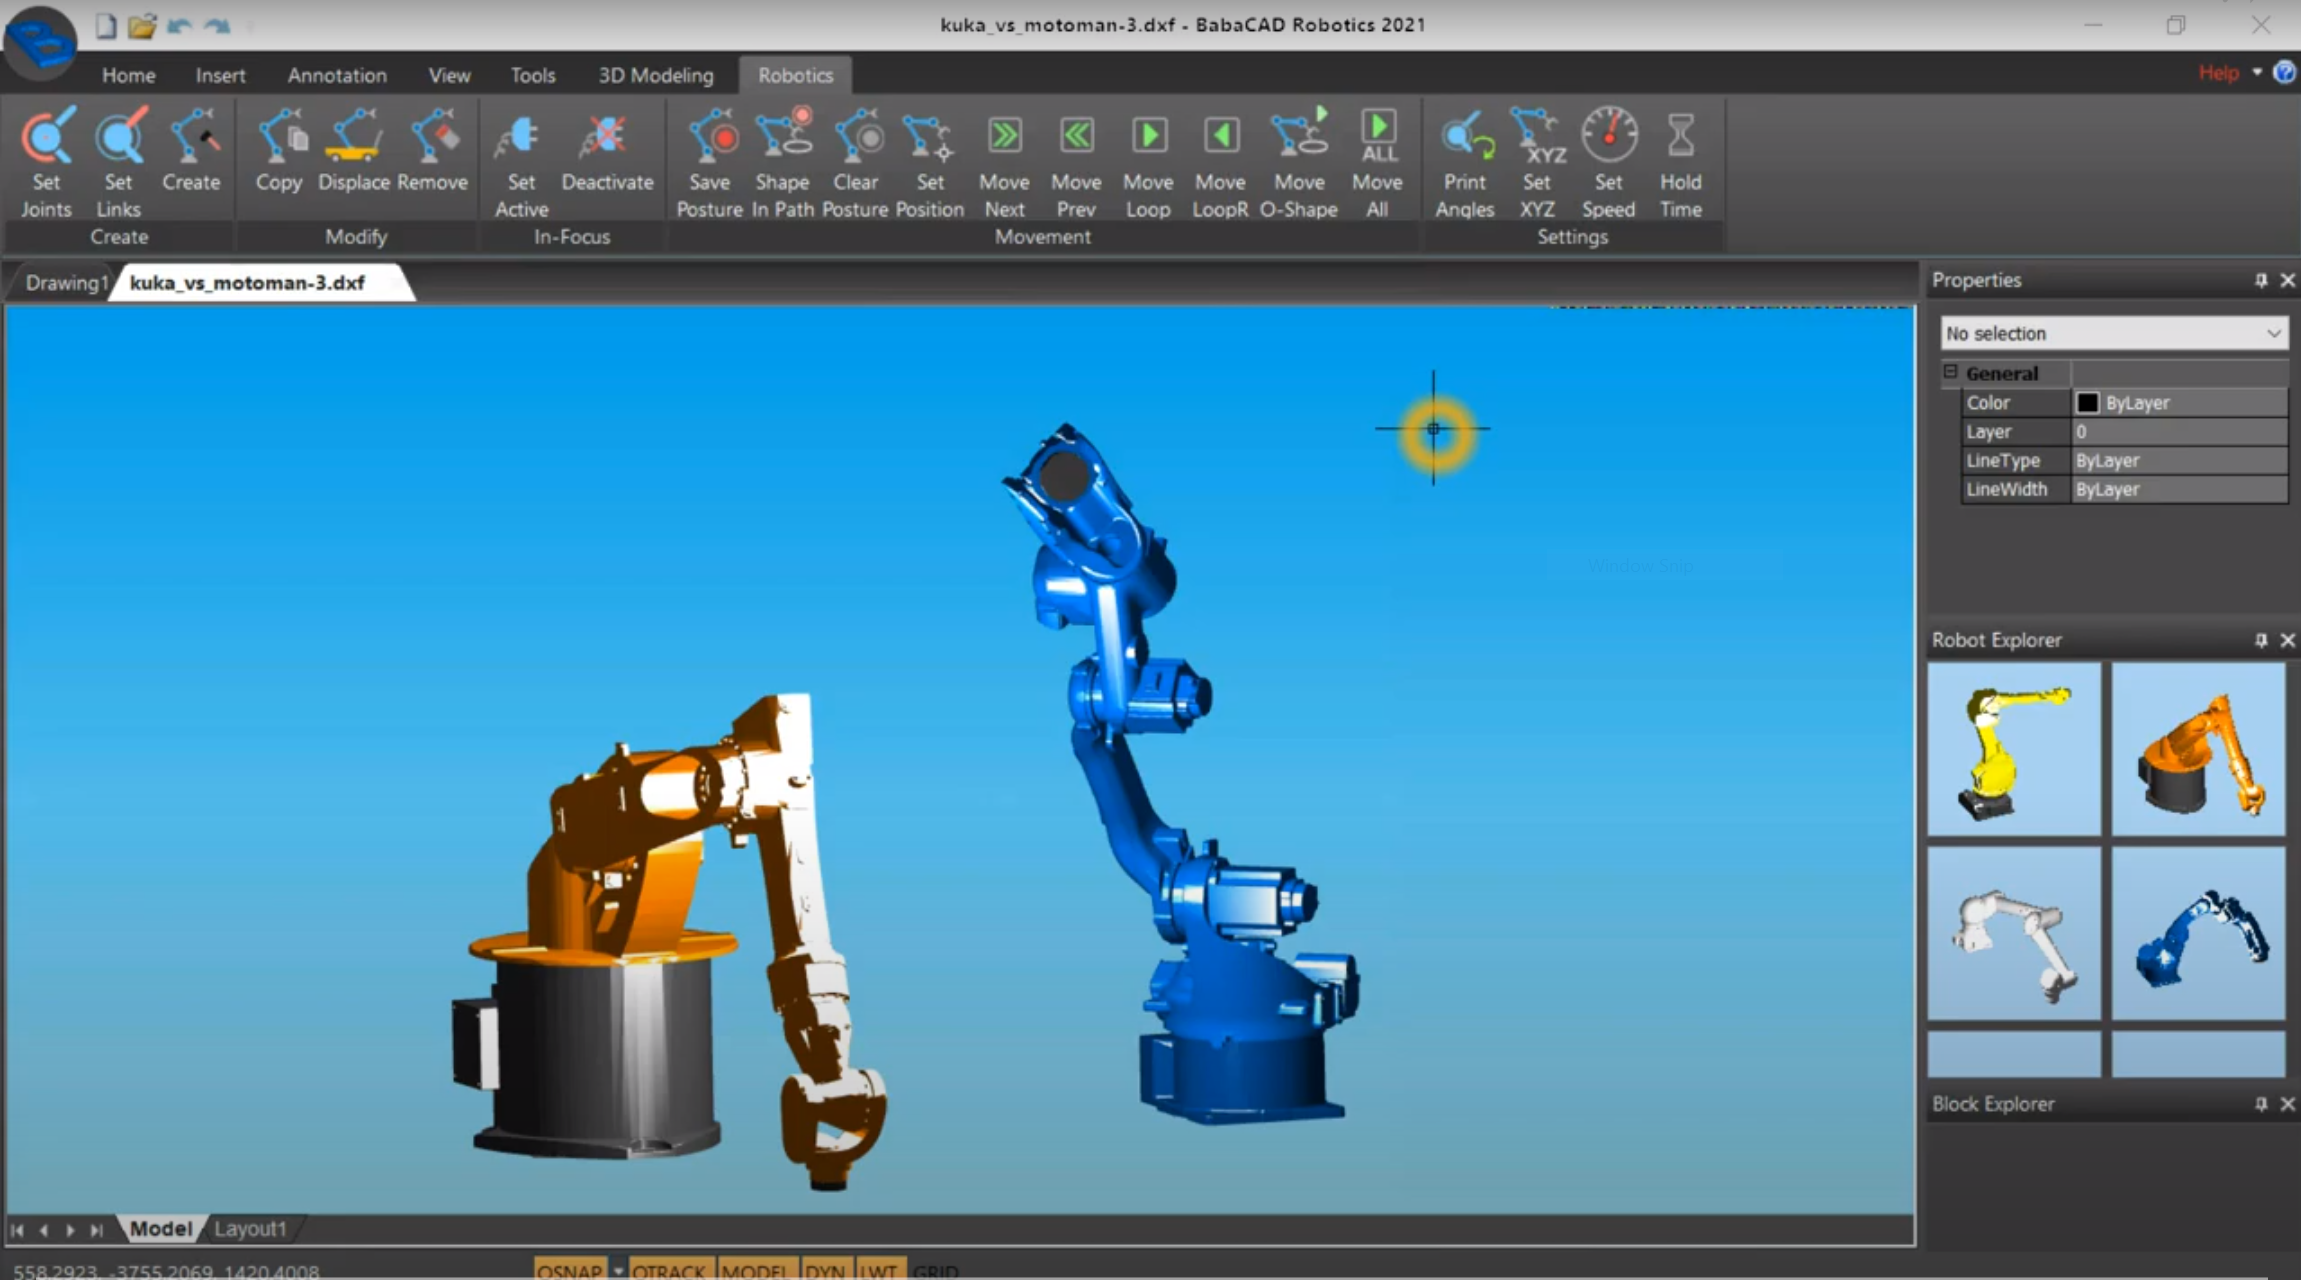 BabaCAD Robotics 2021 - Simulation & Control software